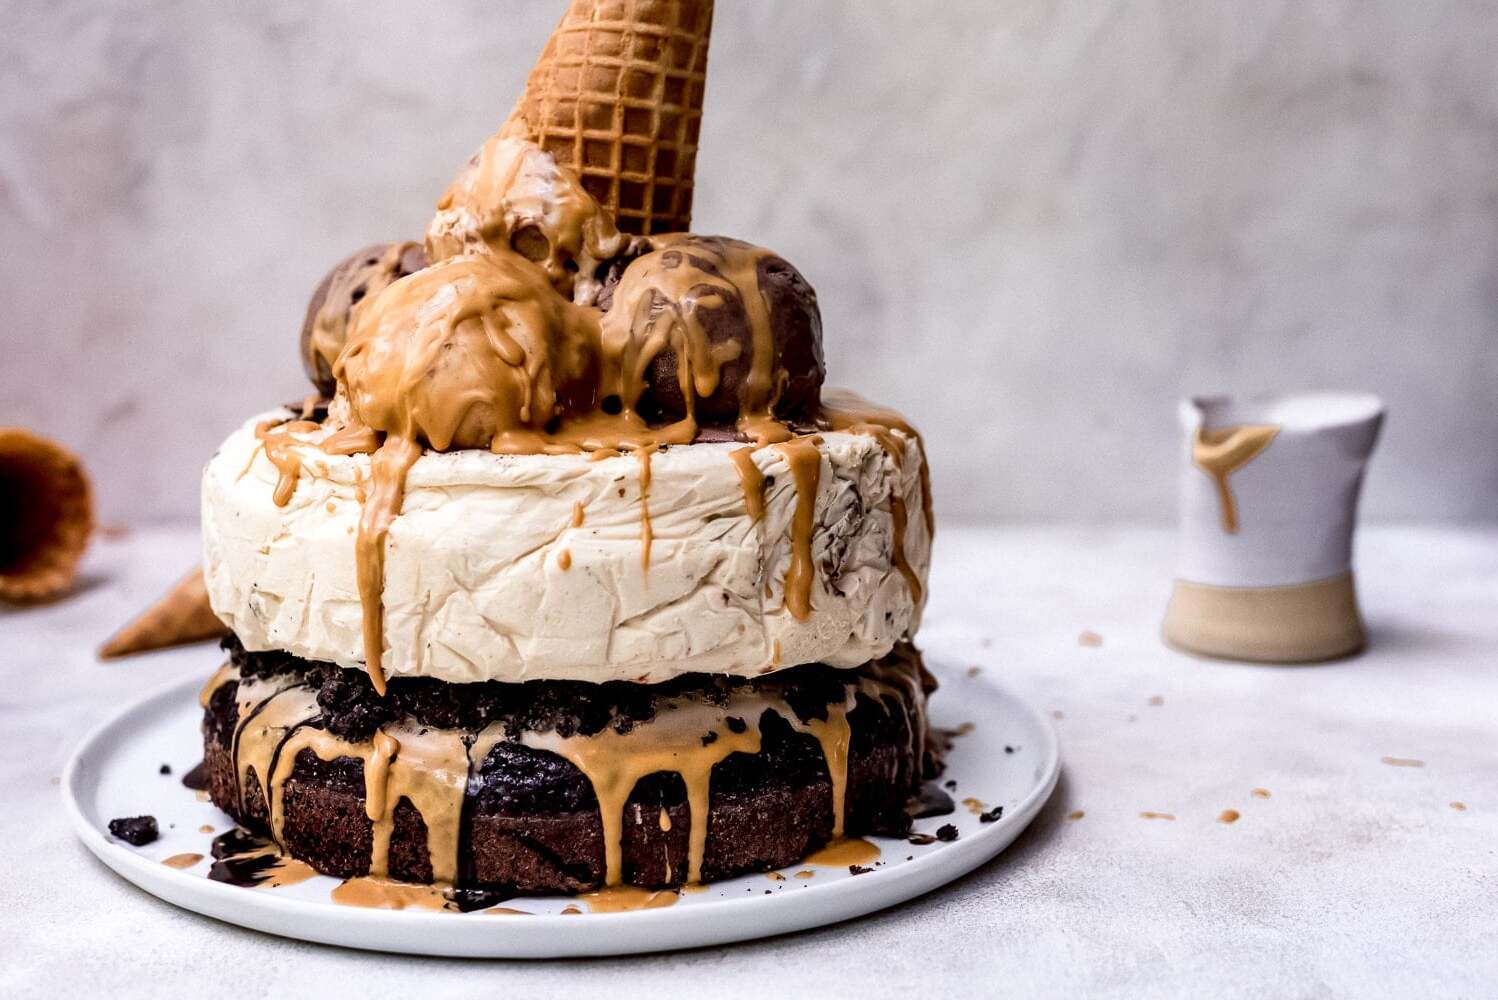 Ice Cream Sandwich Cake with Chocolate and Peanut Butter Sauce Recipe